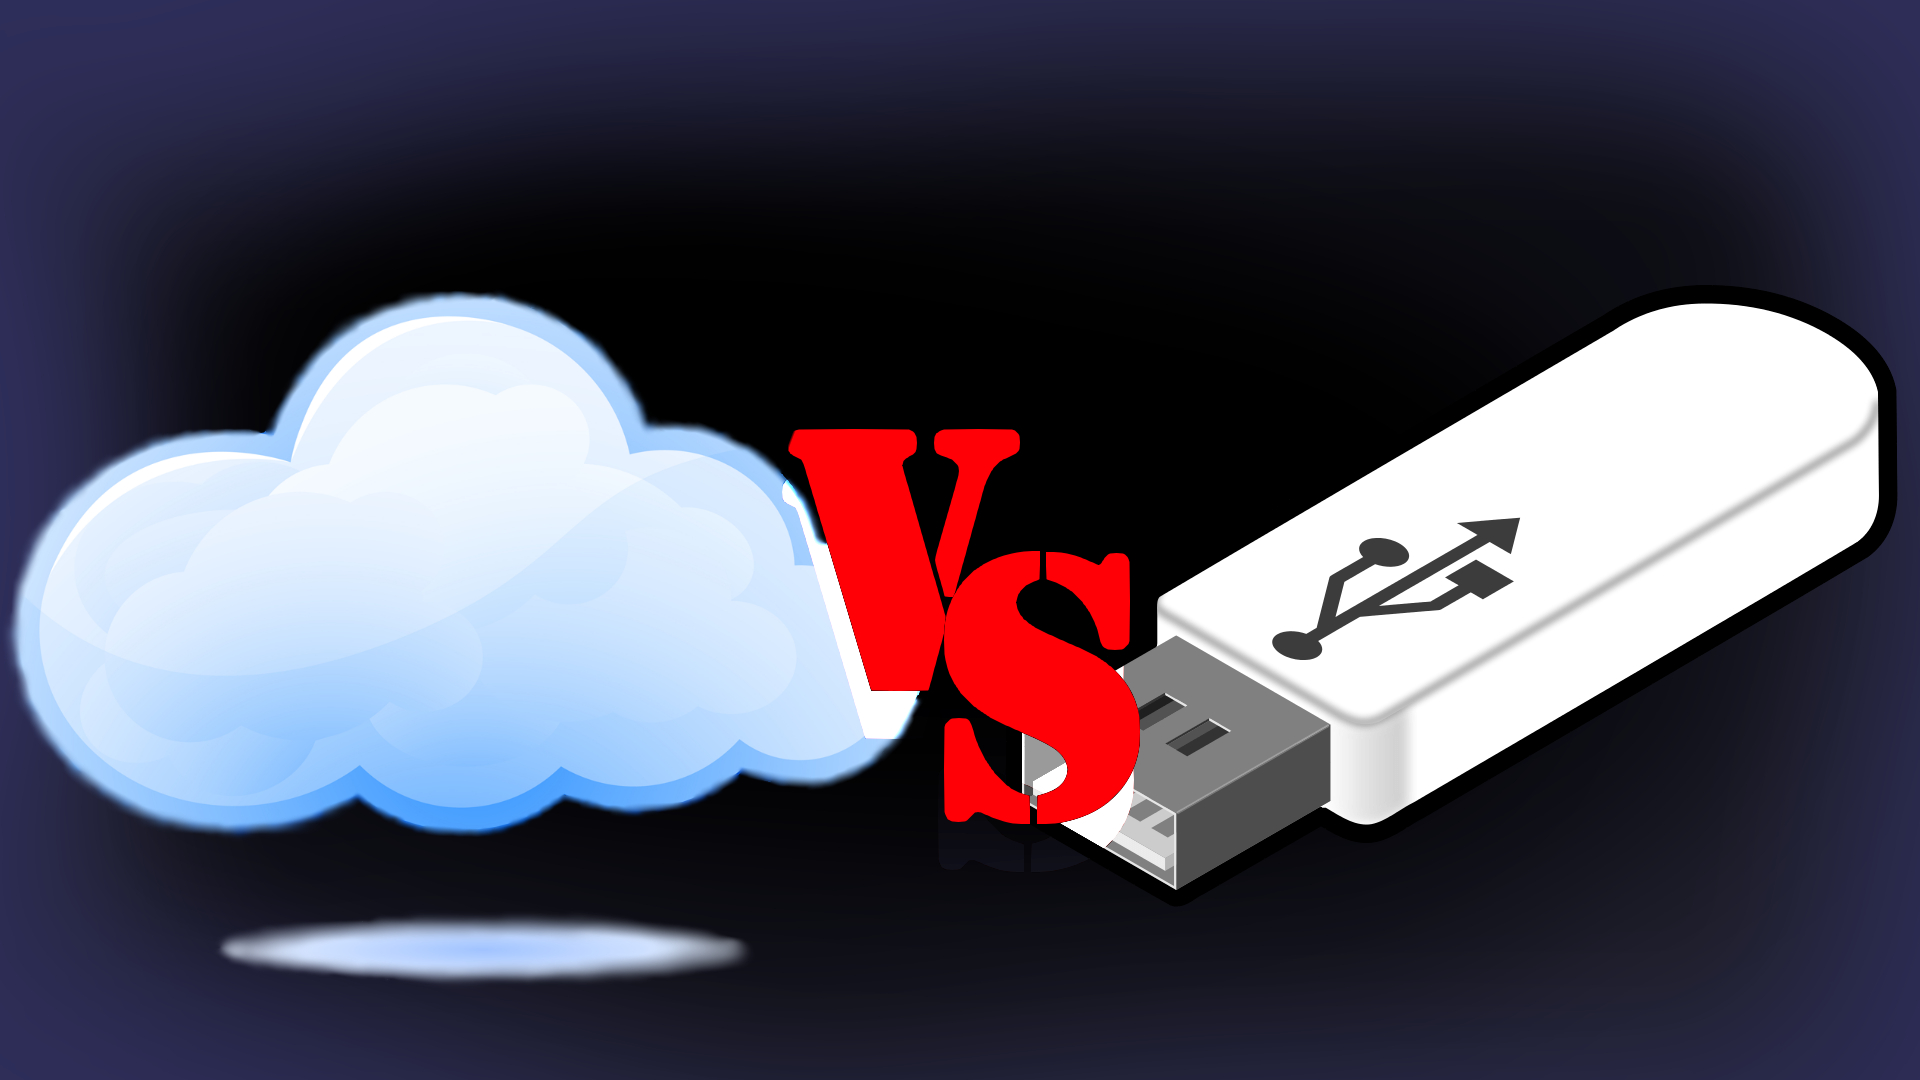 Cloud vs USB Stick